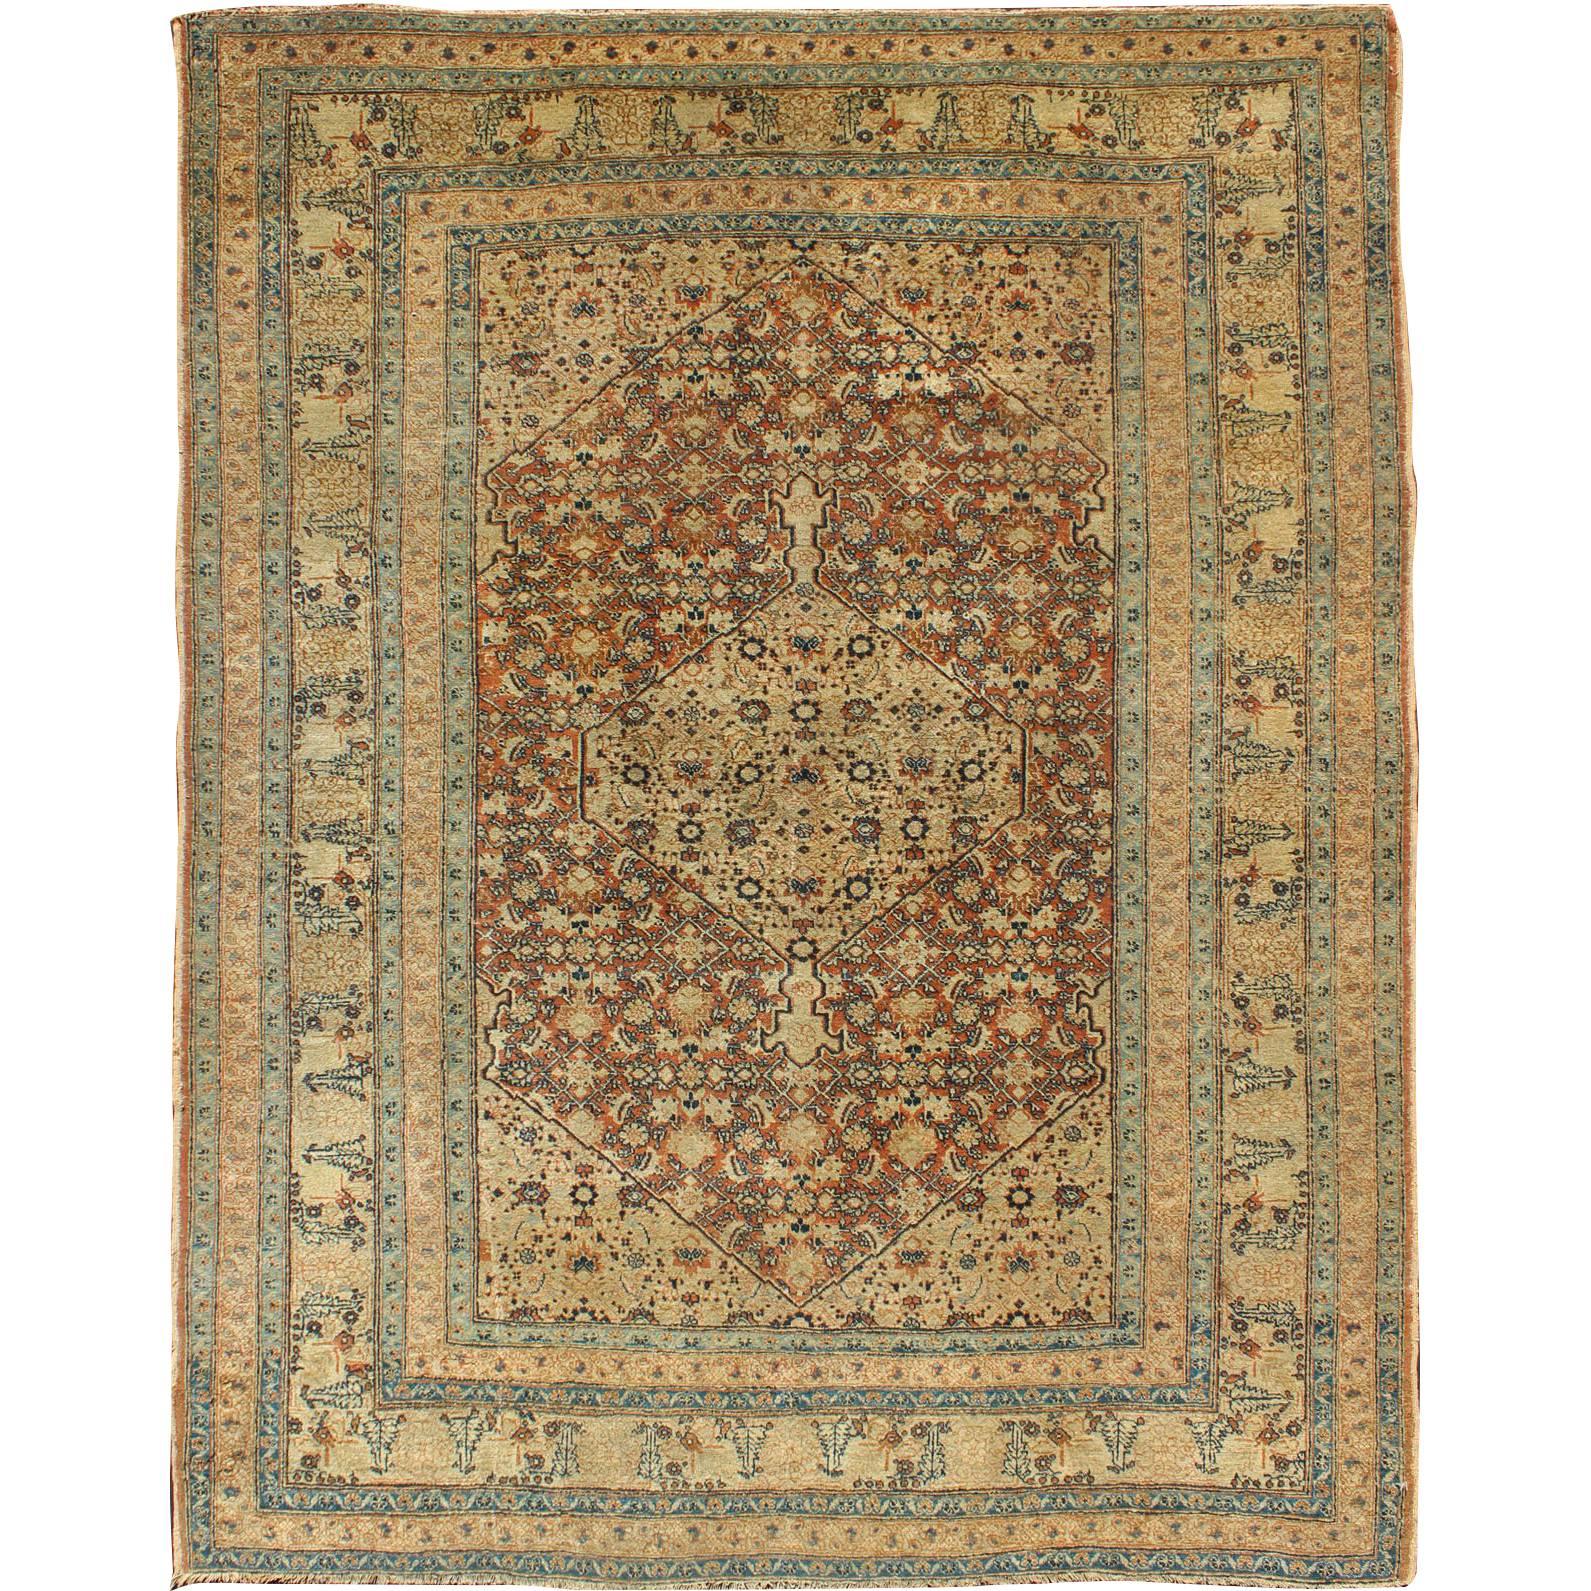 Antique Persian Tabriz Haj Jalili Fine Rug in Earth tones, Red Brown Background For Sale